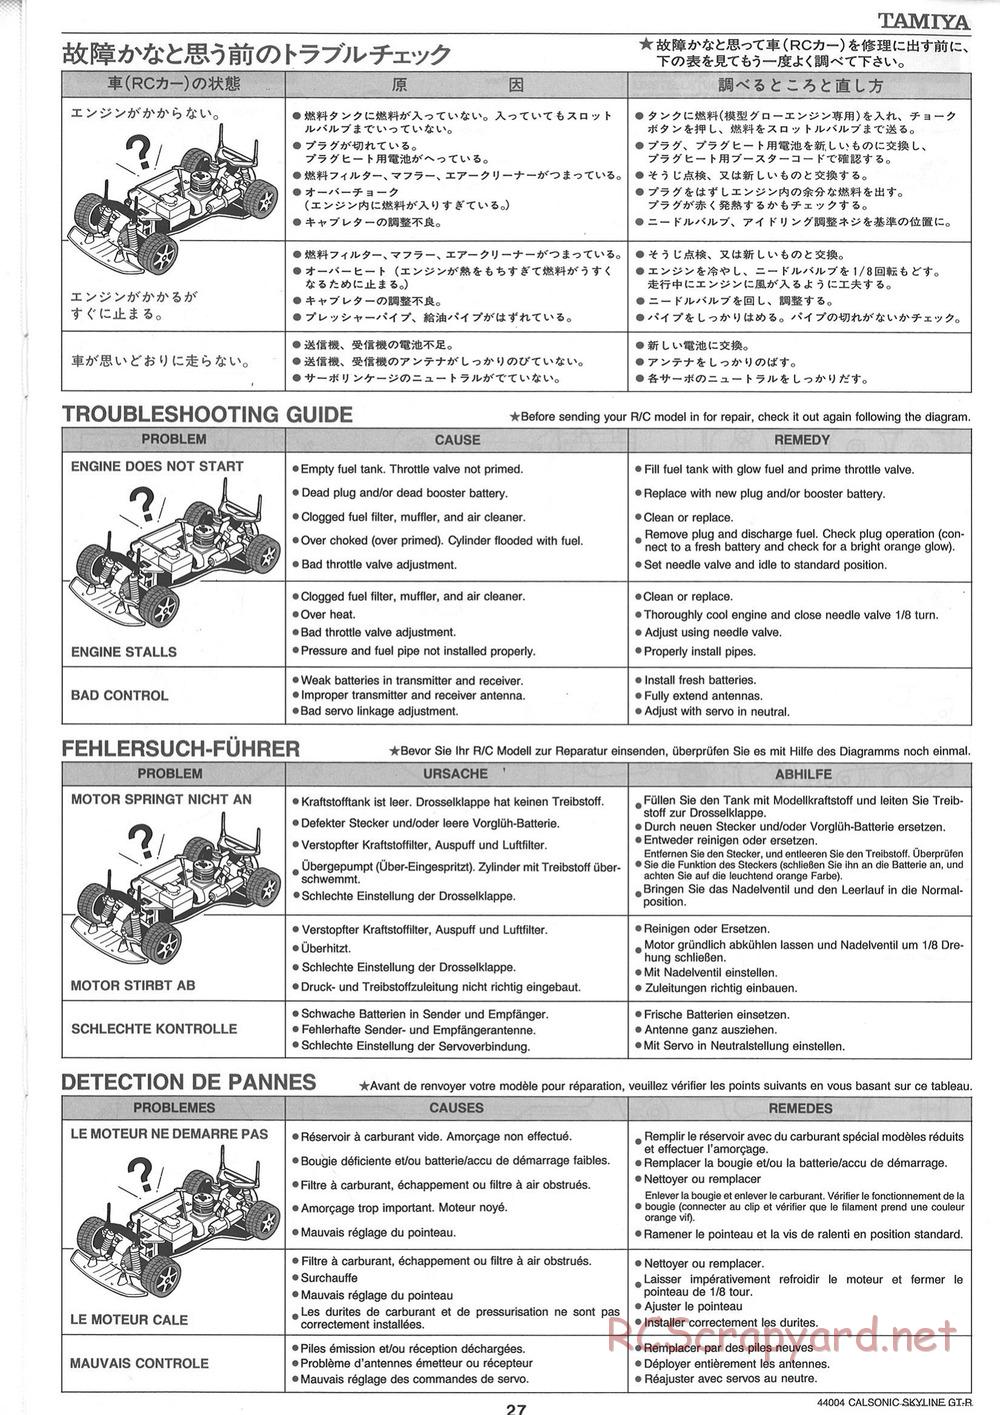 Tamiya - Calsonic GT-R - TGX Mk.1 Chassis - Manual - Page 27